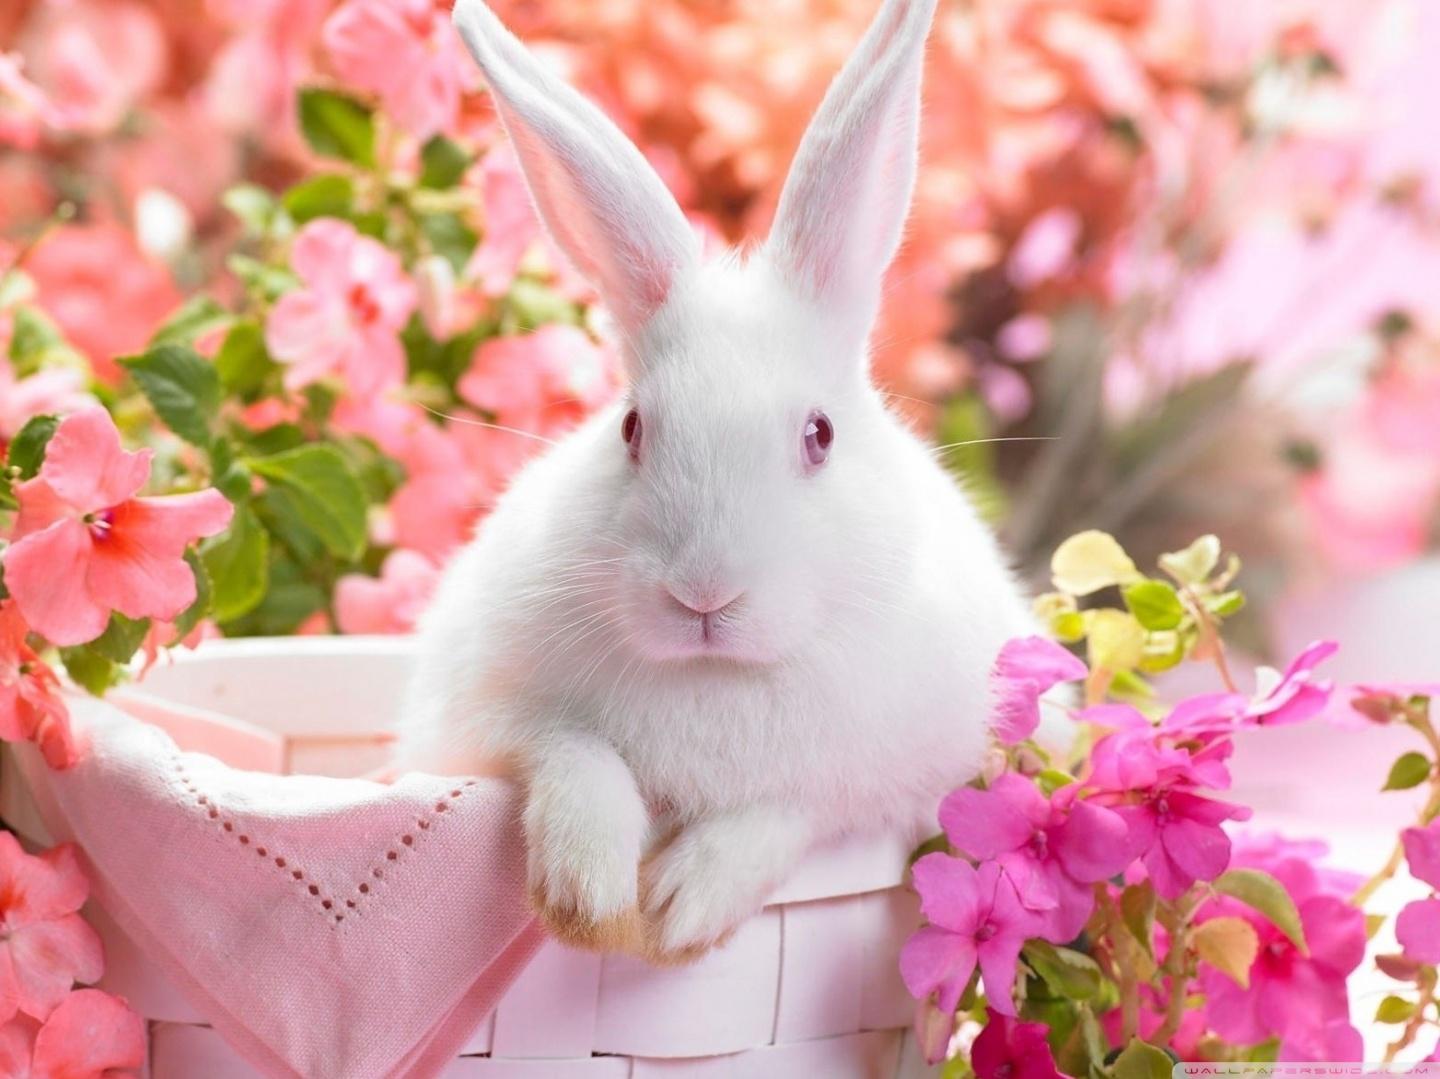 Cute Easter Bunny Ultra HD Desktop Background Wallpaper For 4k UHD